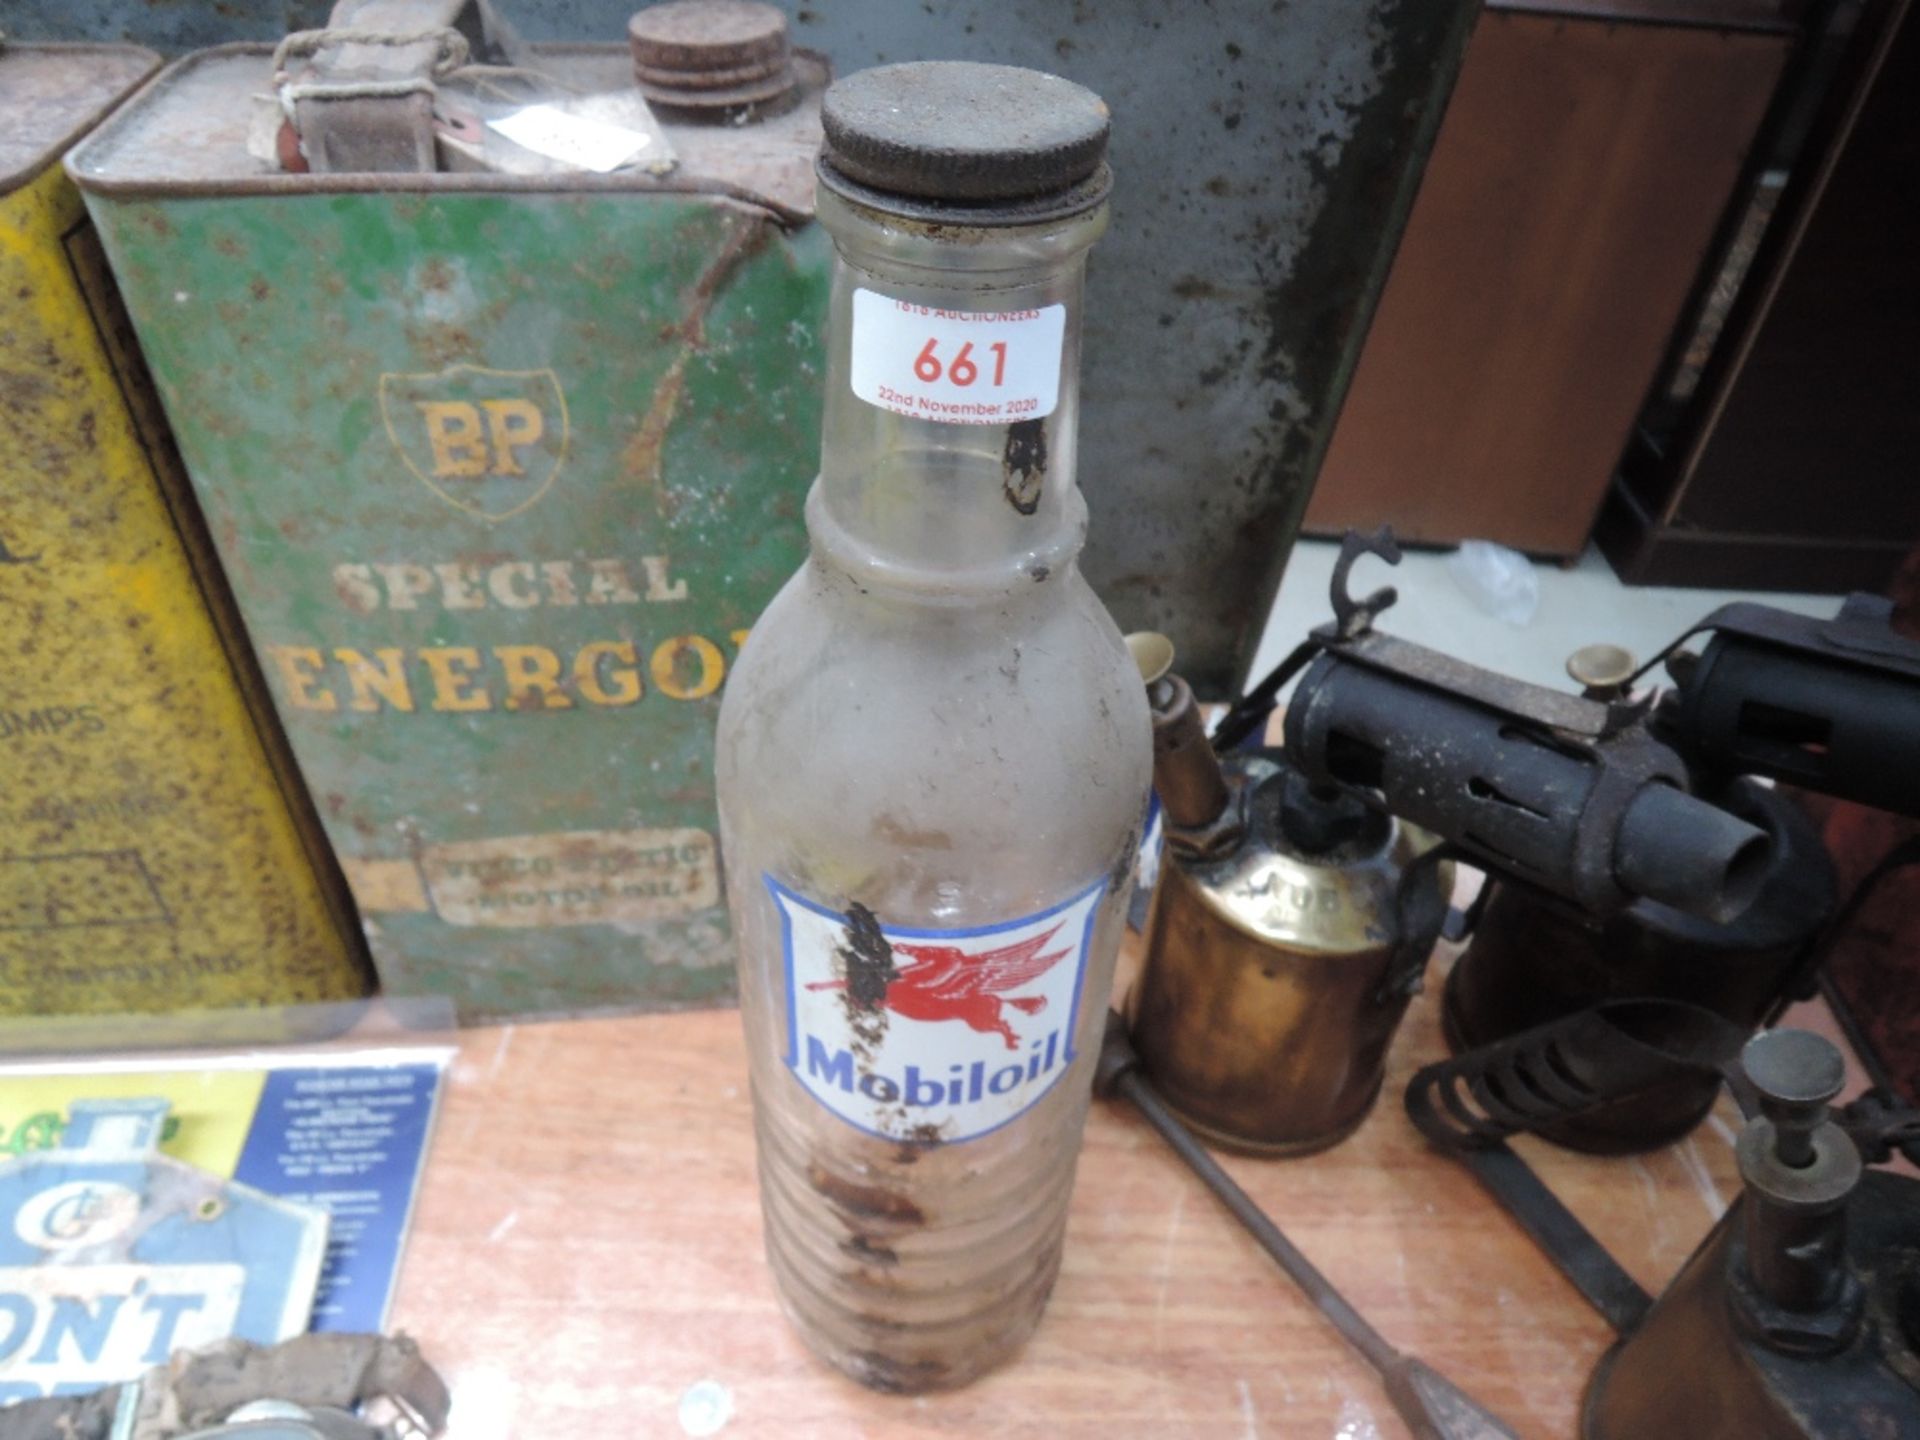 A glass Mobiloil oil bottle with original cap.